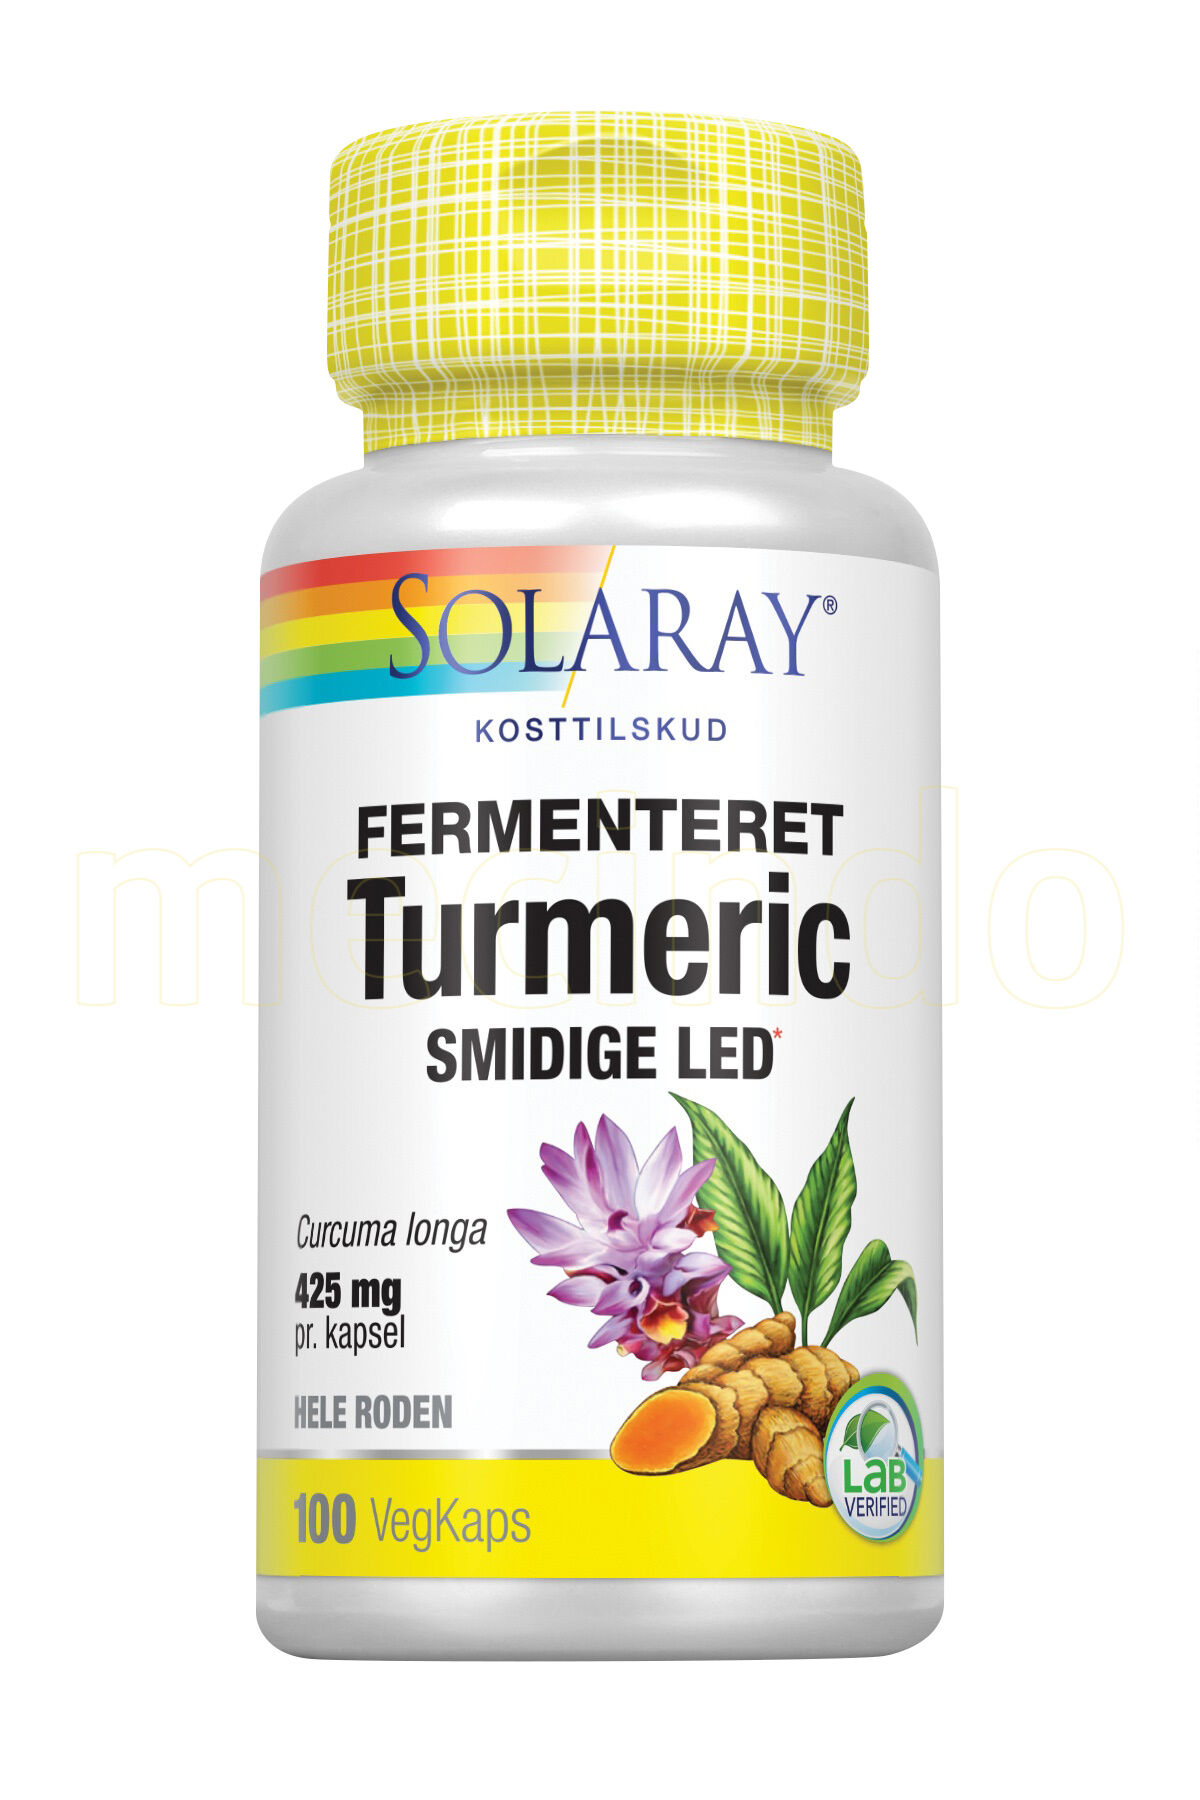 Solaray Turmeric Fermenteret - 425 mg - 100 Kapsler